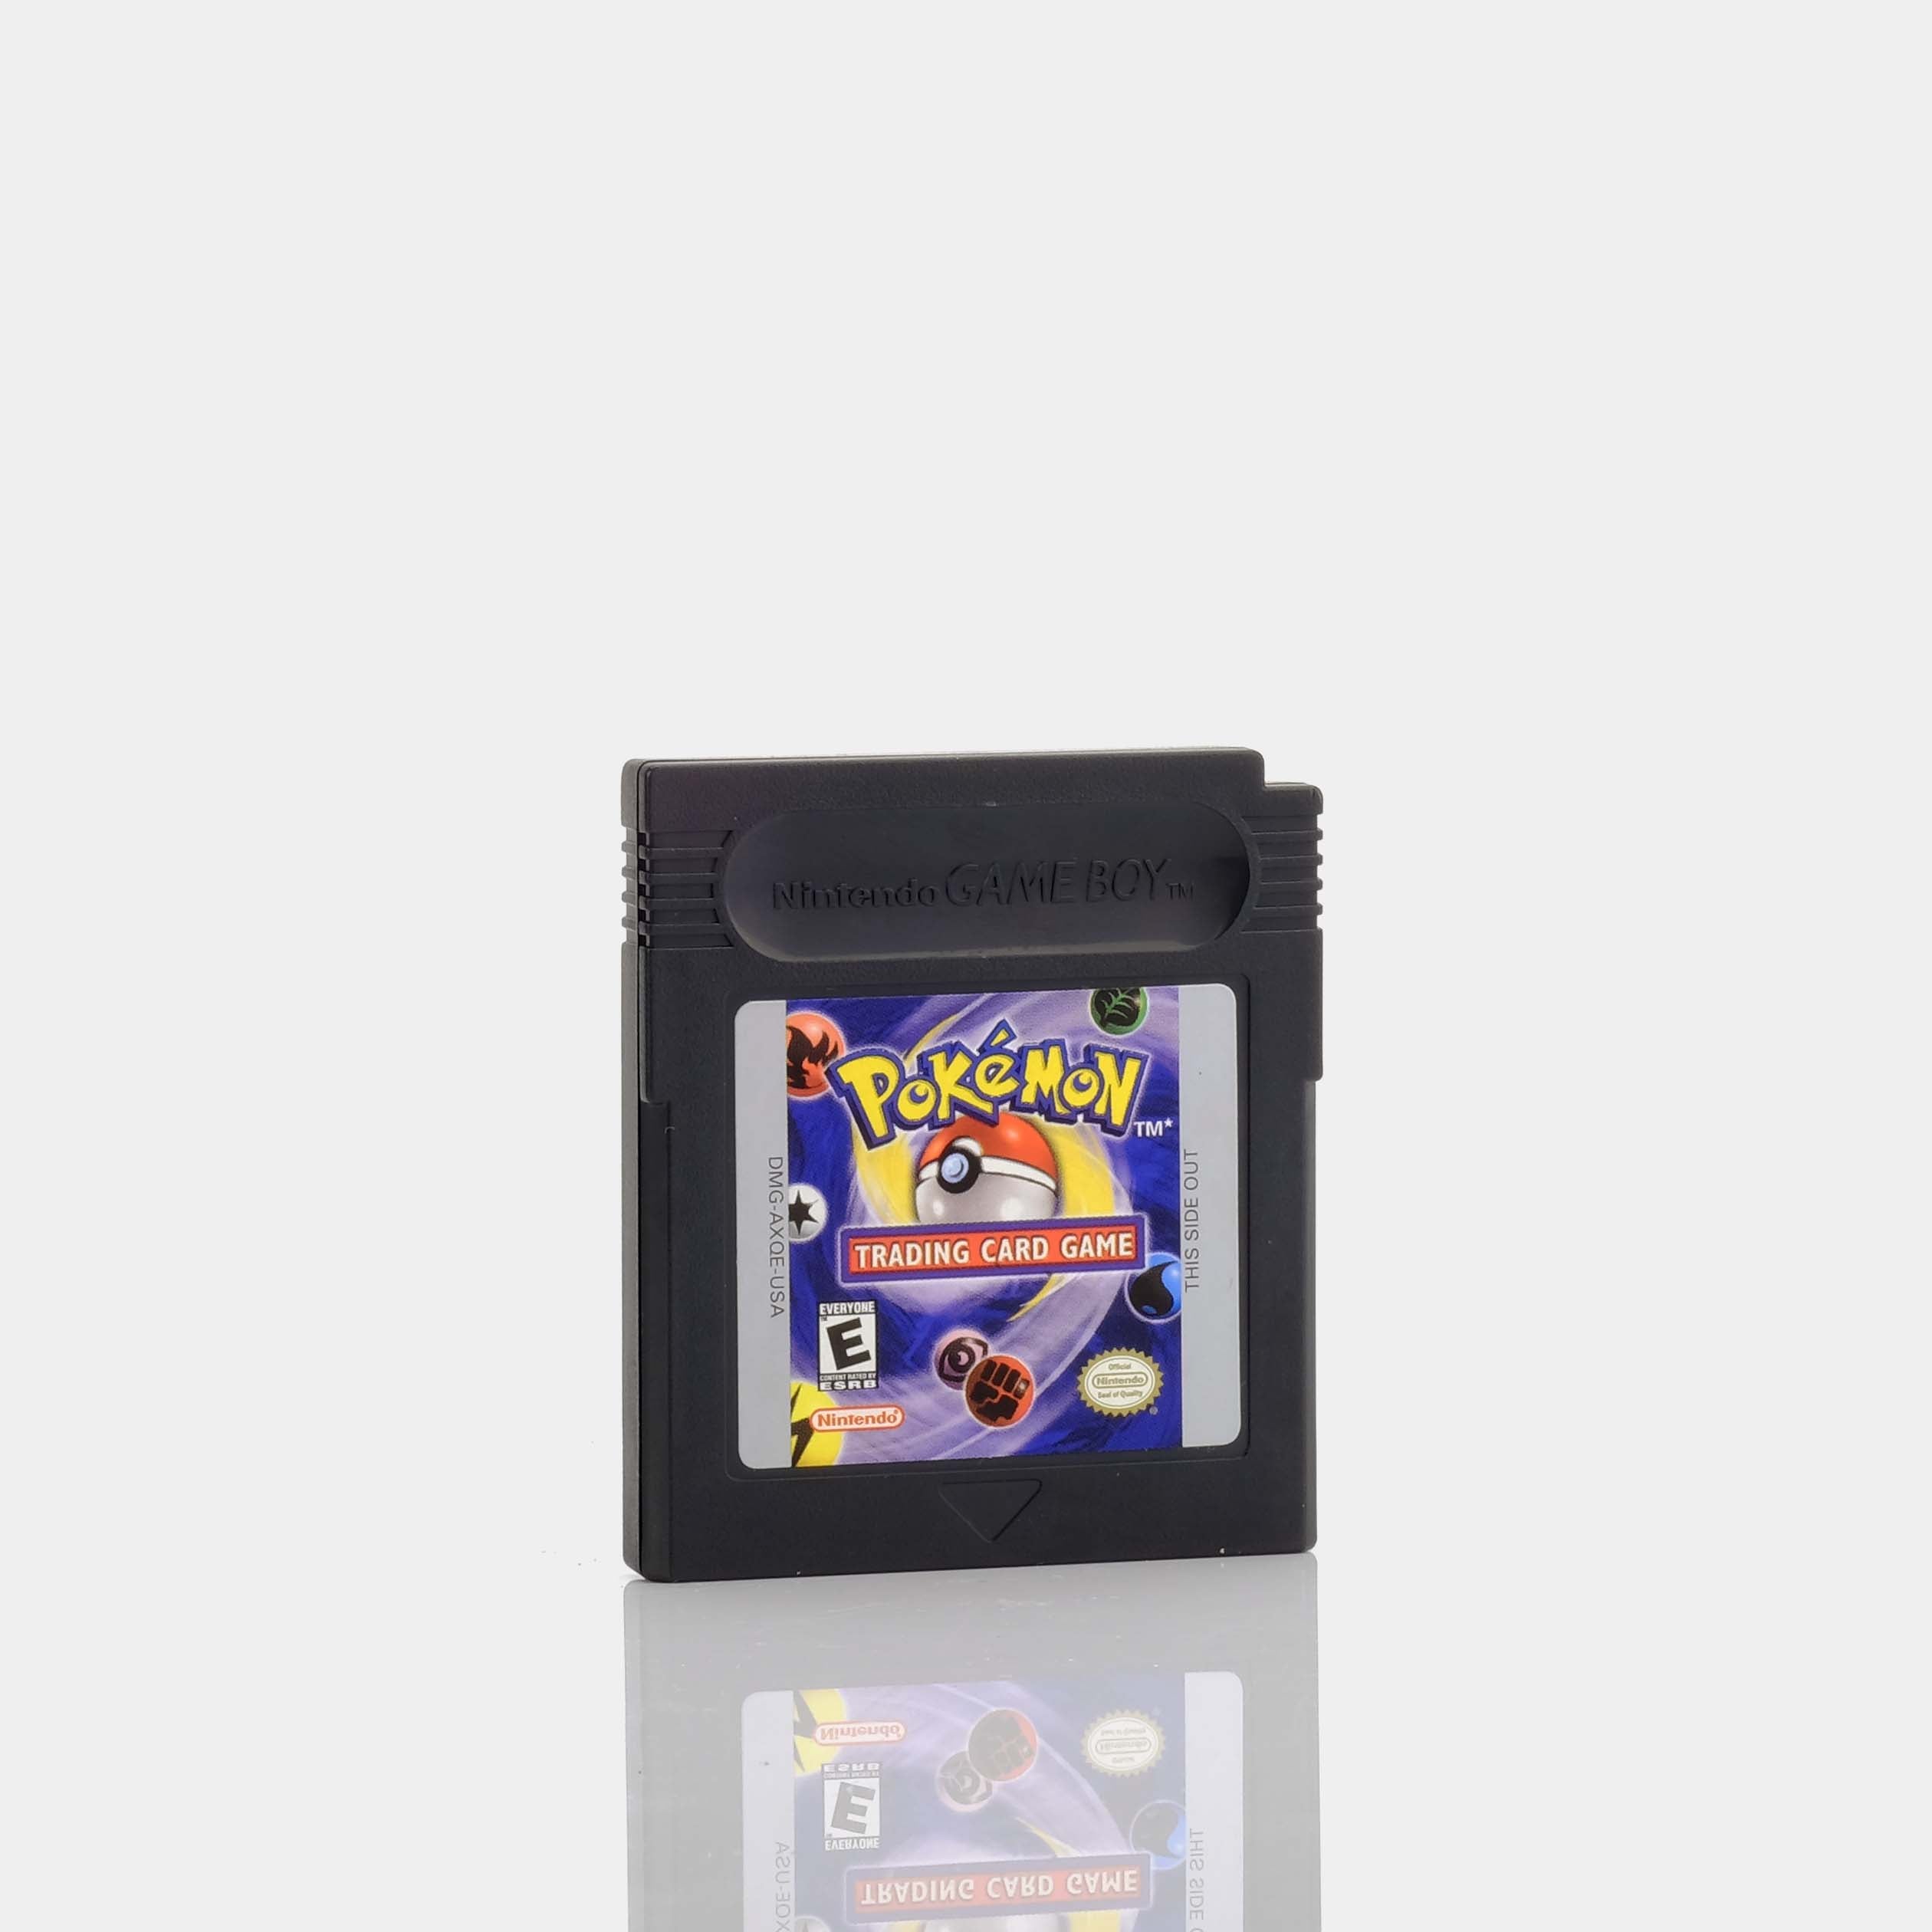 Pokémon Trading Card Game (2000) Game Boy Game